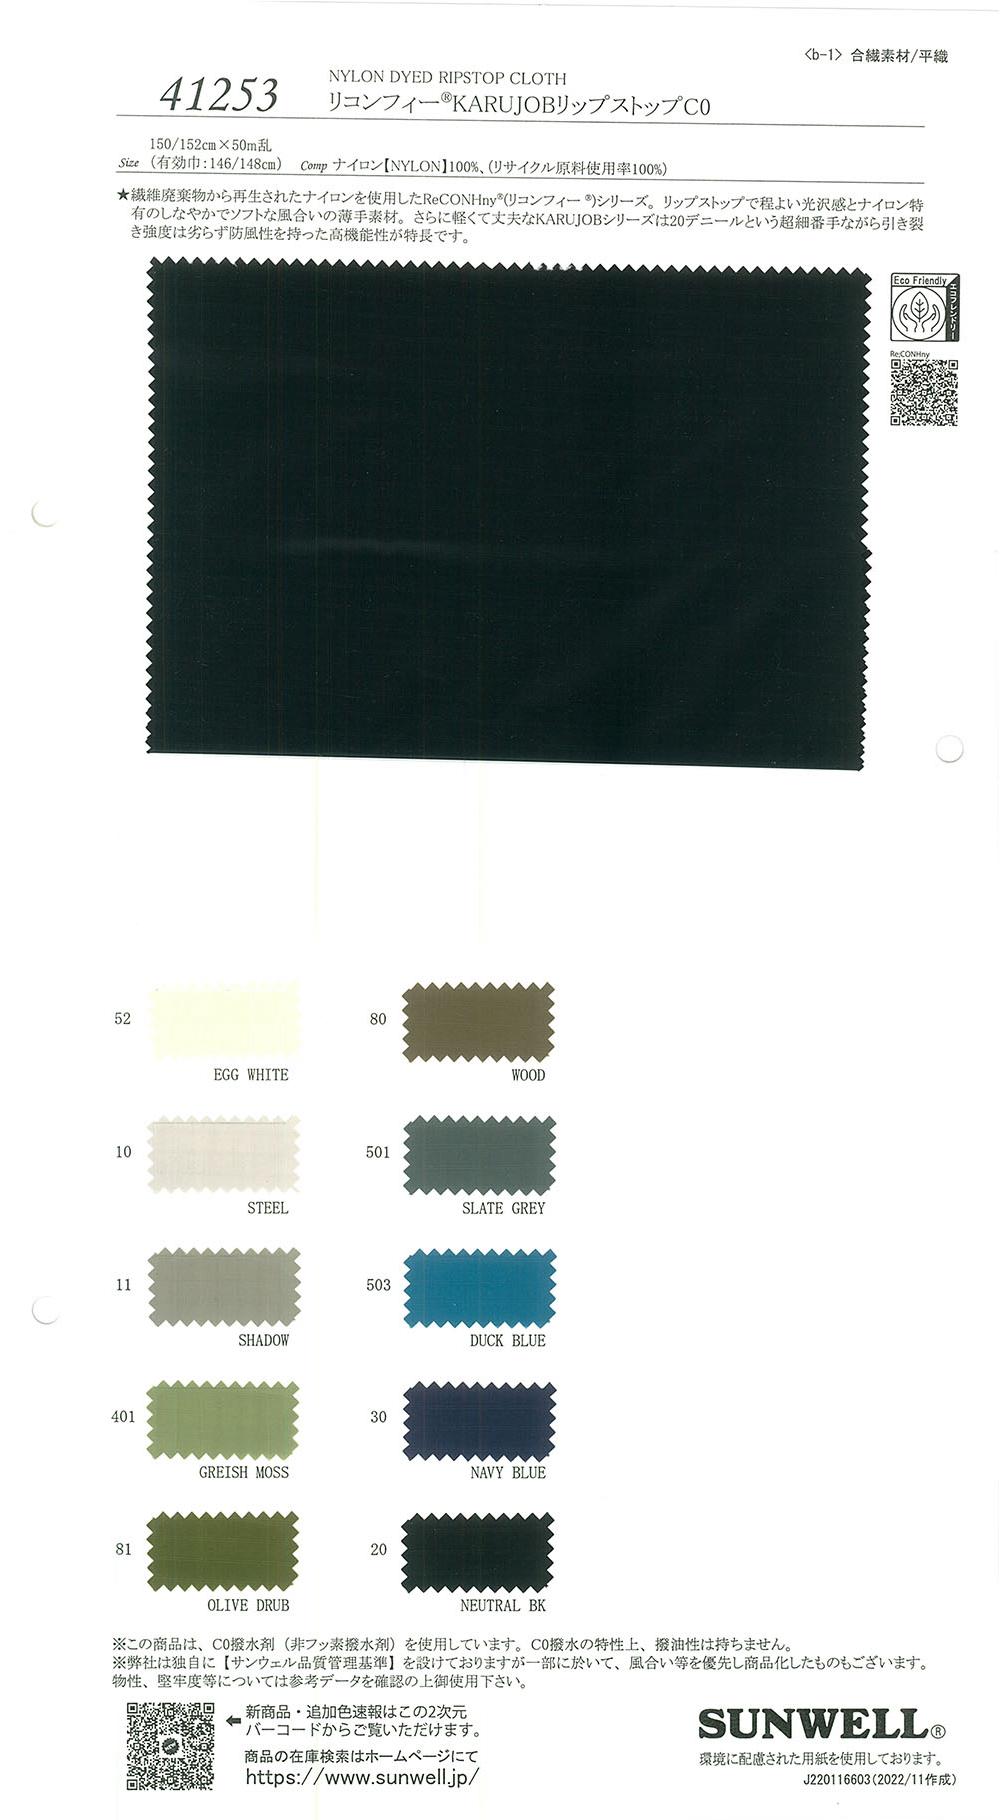 41253 ReCONHny® KARUJOB Ripstop C0[Fabrication De Textile] SUNWELL